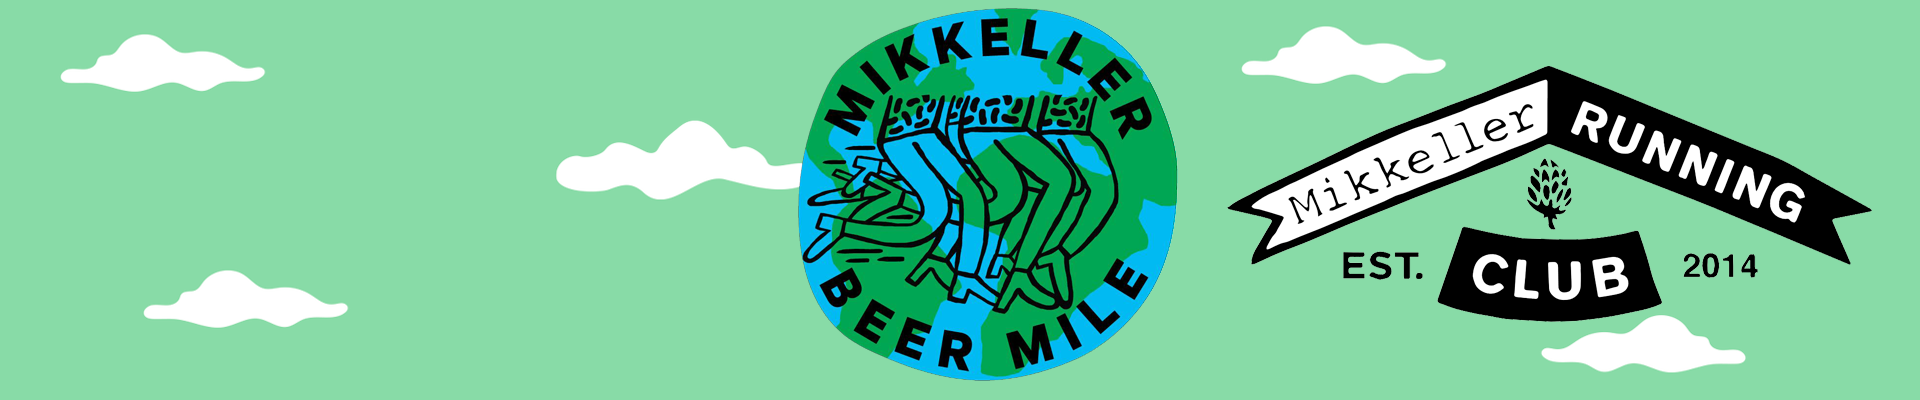 Mikkeller Beer Mile - Herning